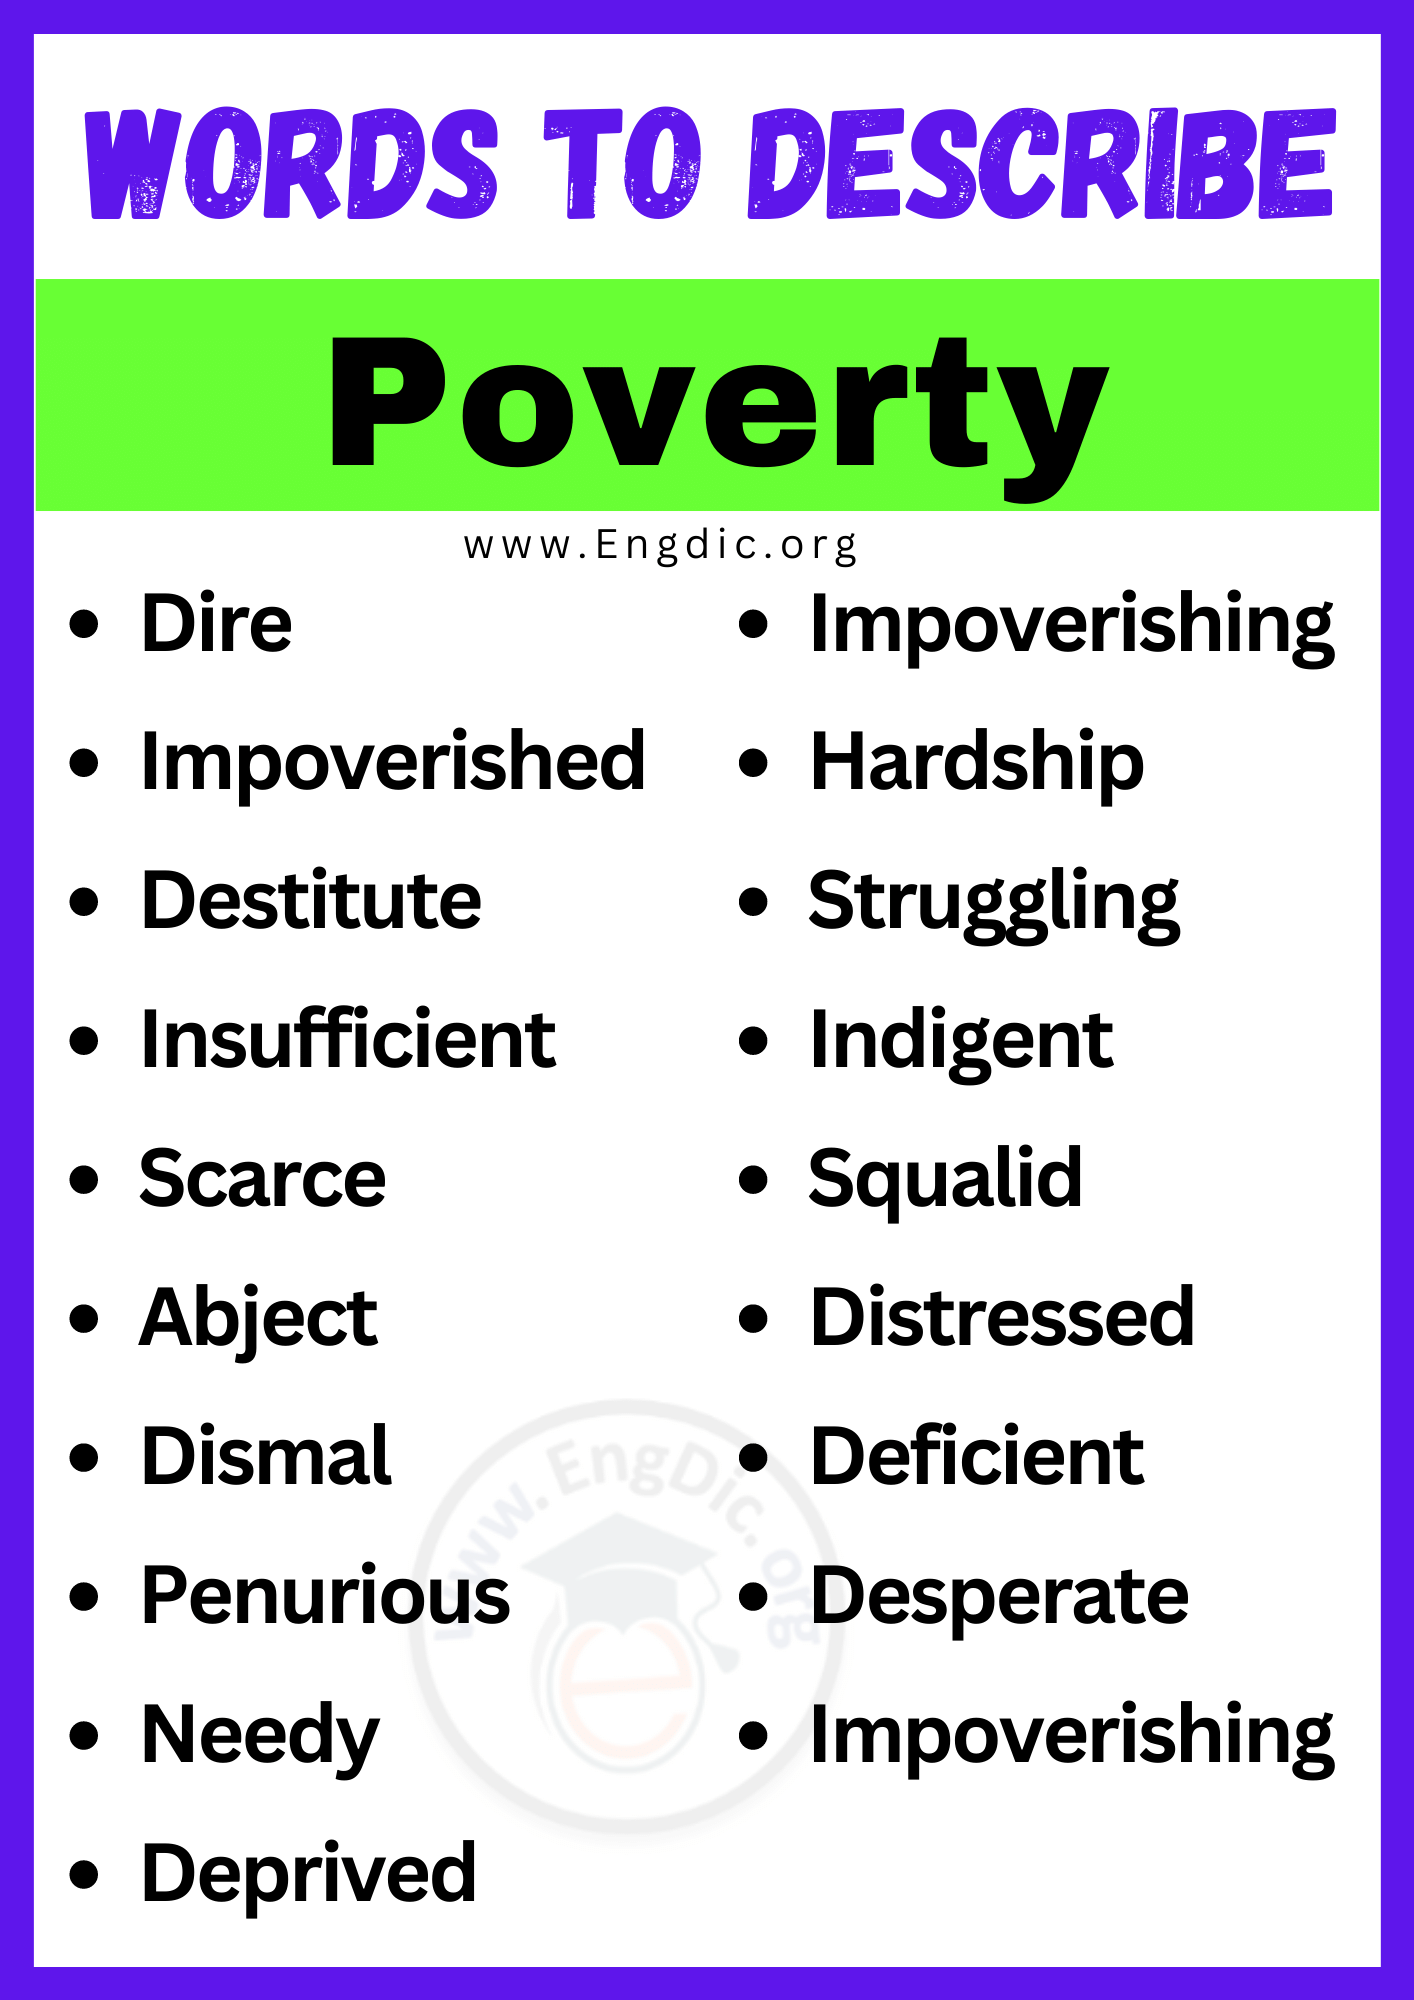 Words to Describe Poverty